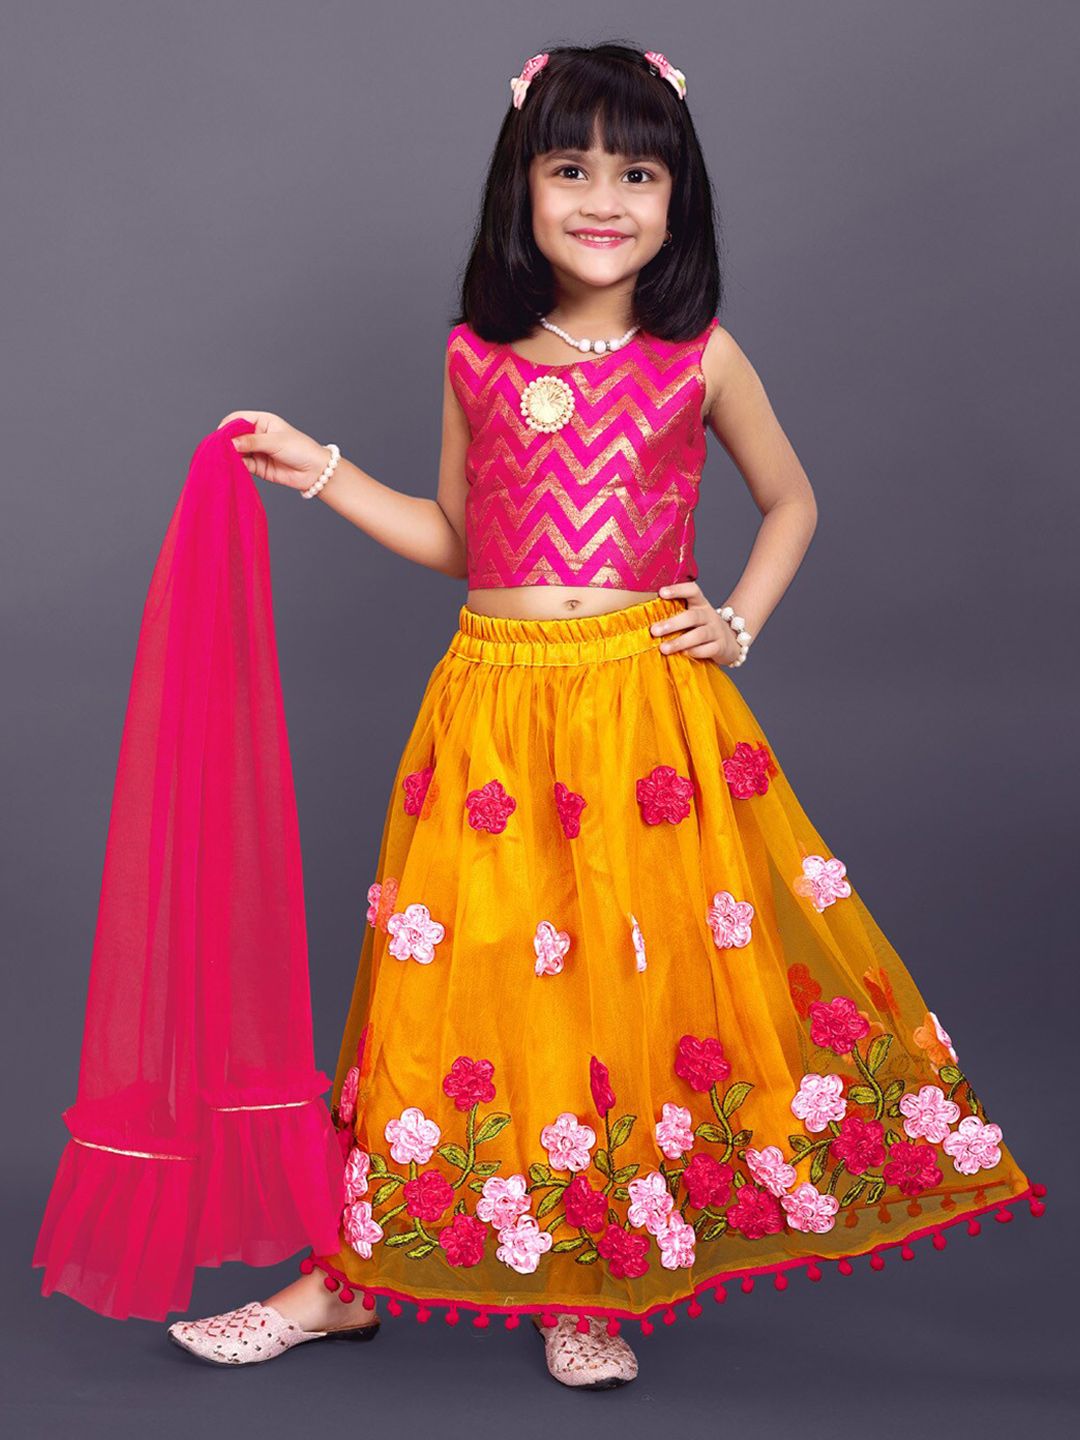 BAESD Girls Chevron Printed Thread Work Ready to Wear Lehenga & Blouse With Dupatta Price in India